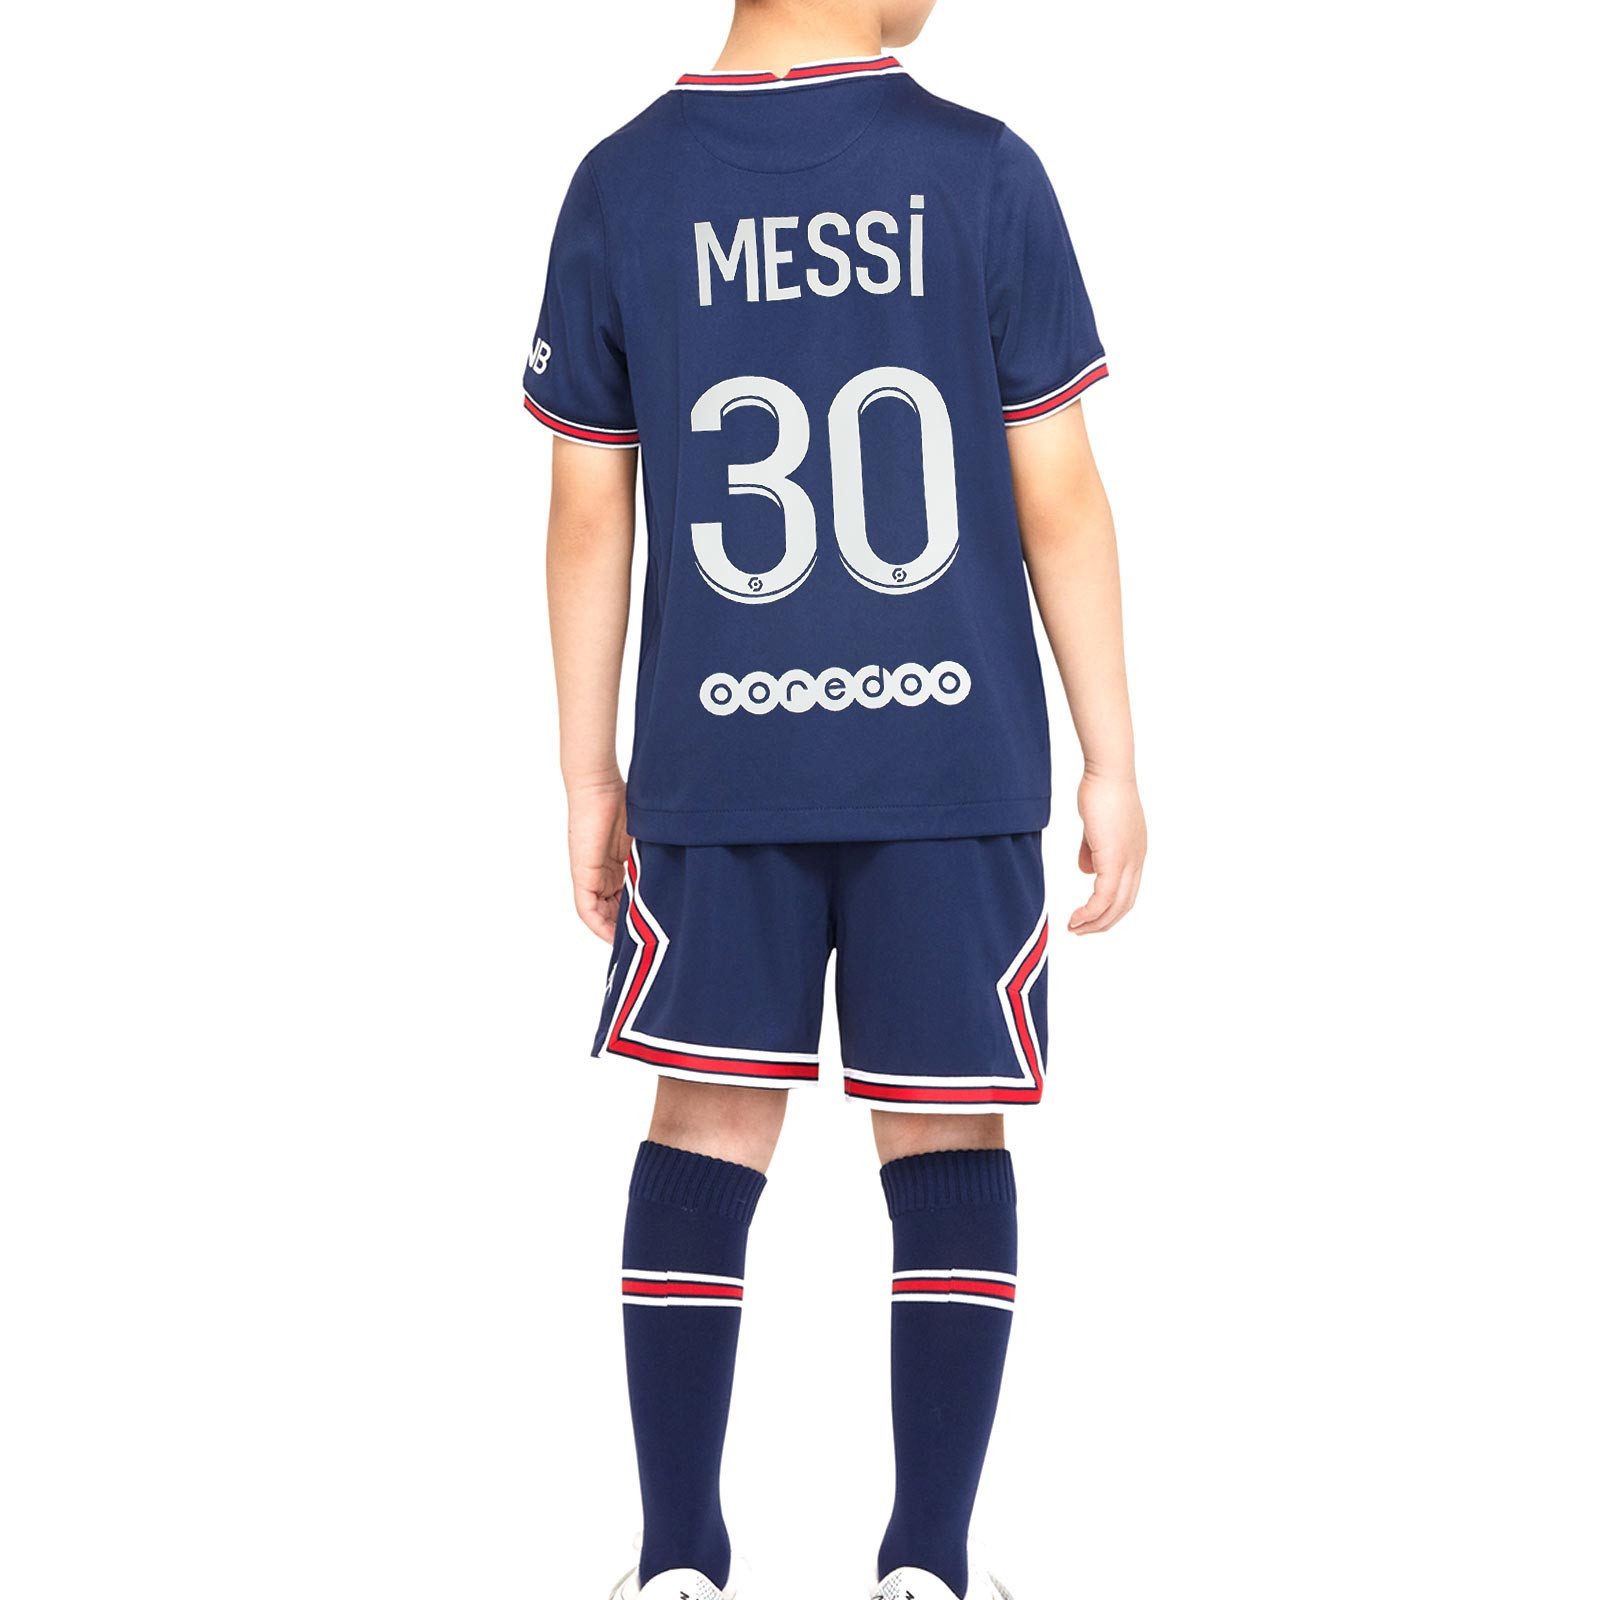 Nike PSG x Jordan 6-14 años Messi 2021 2022 futbolmaniaKids